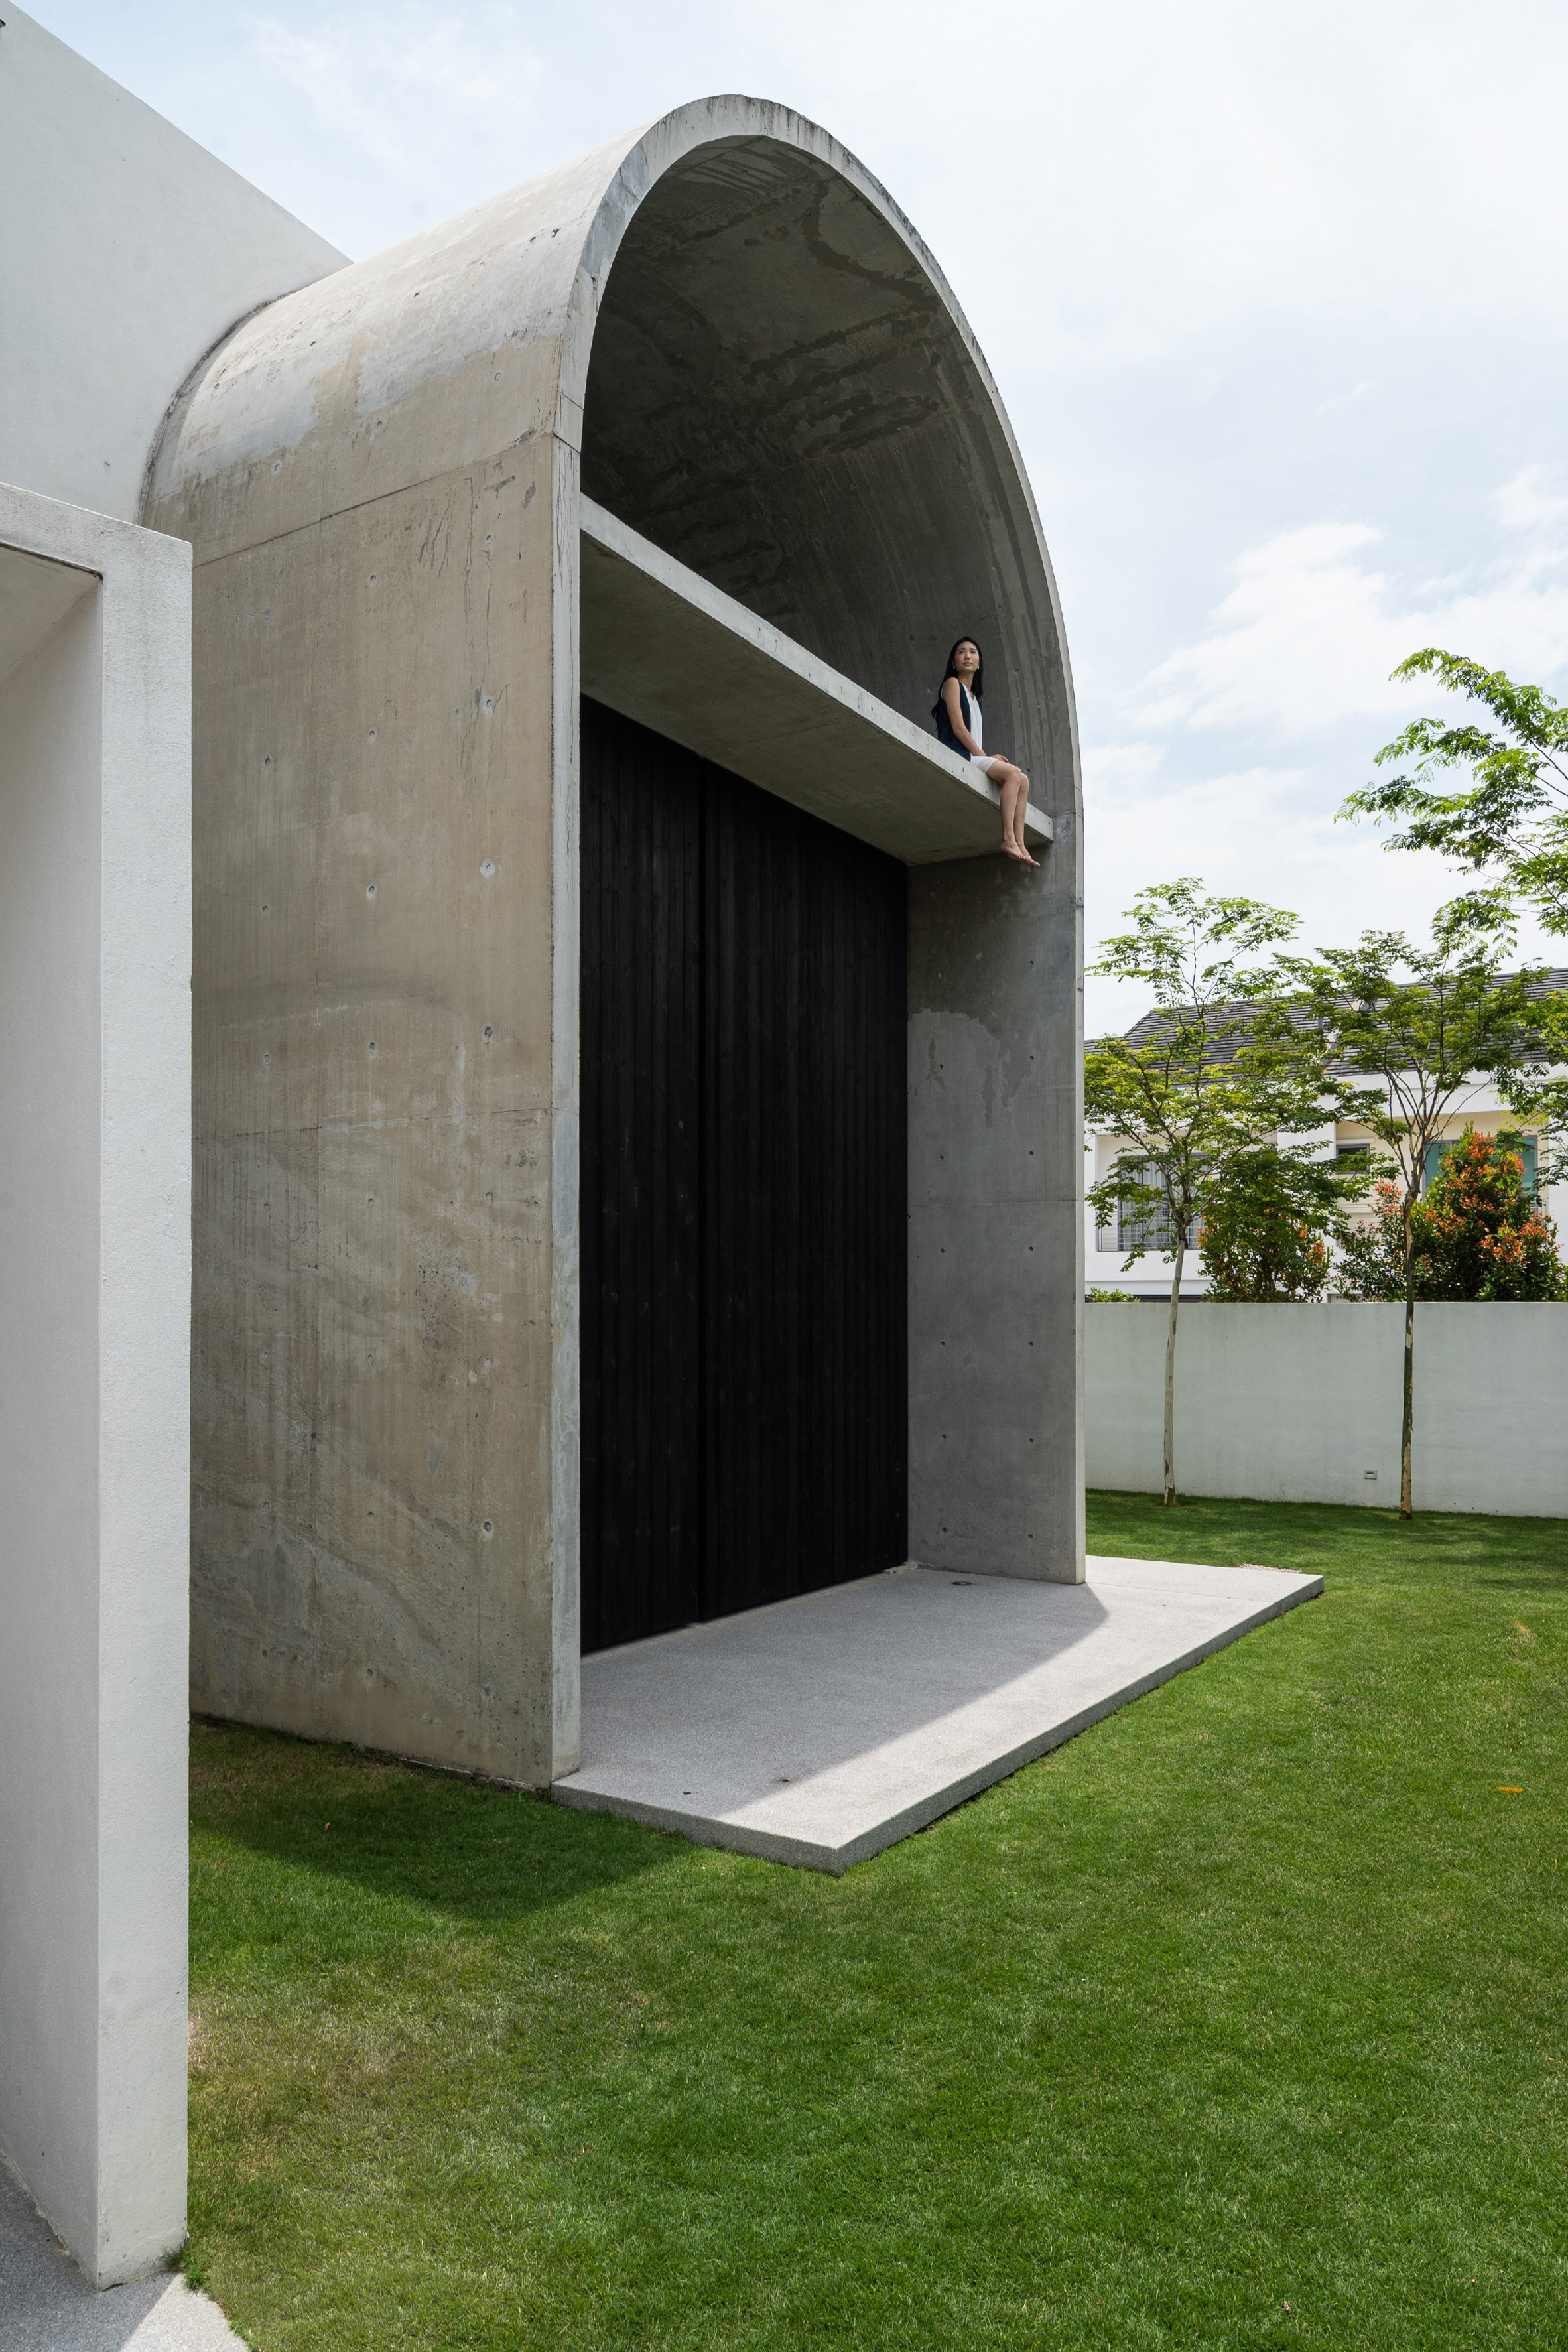 Bewboc House by Fabian Tan barrels-vaulted extension